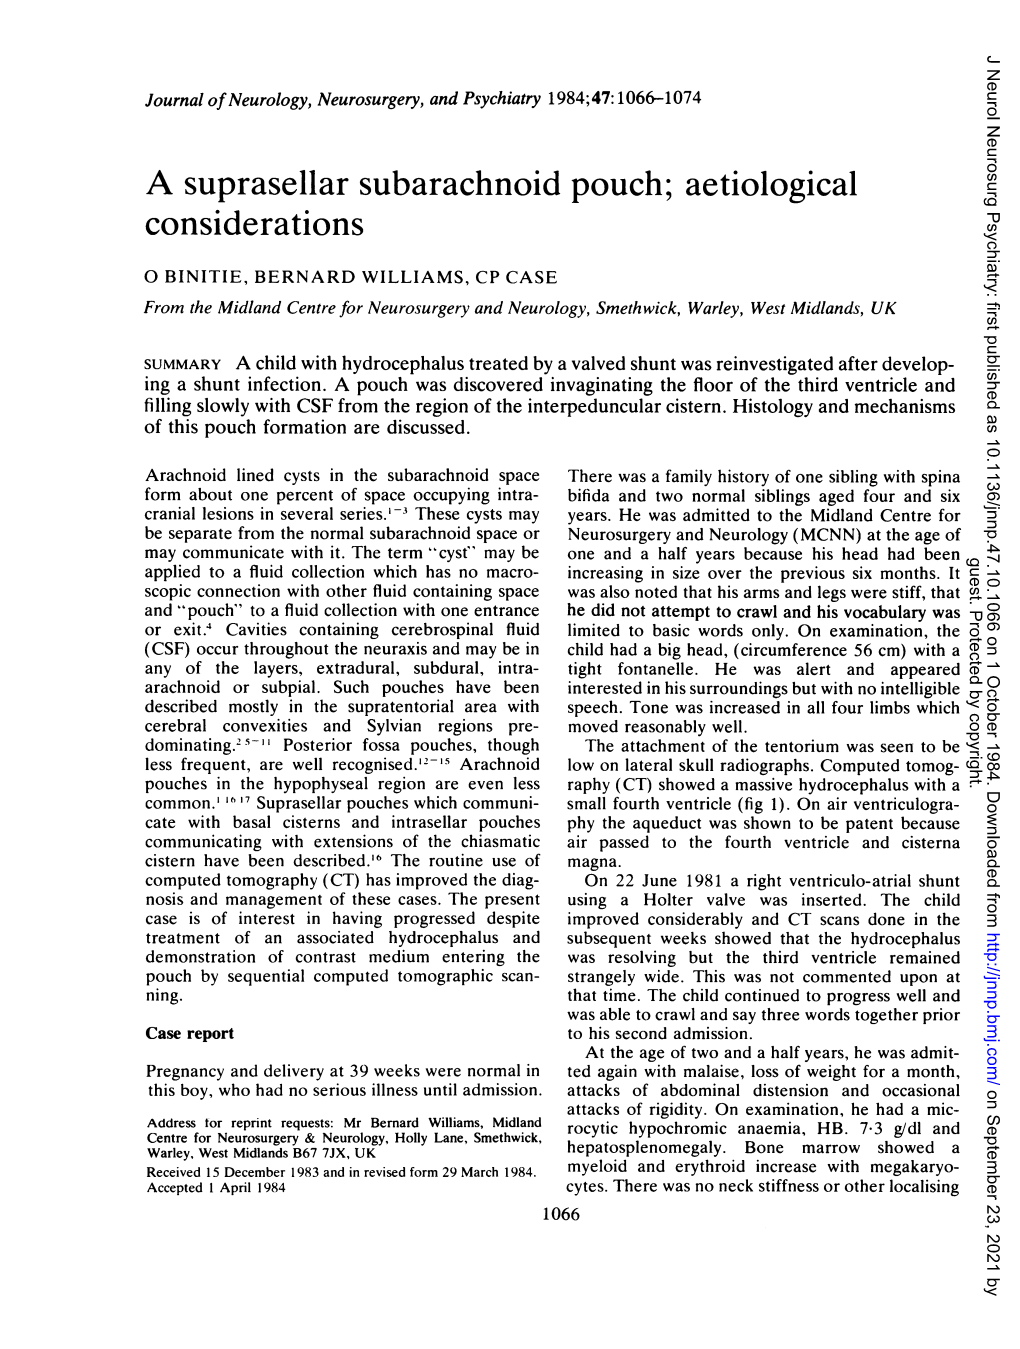 A Suprasellar Subarachnoid Pouch; Aetiological Considerations